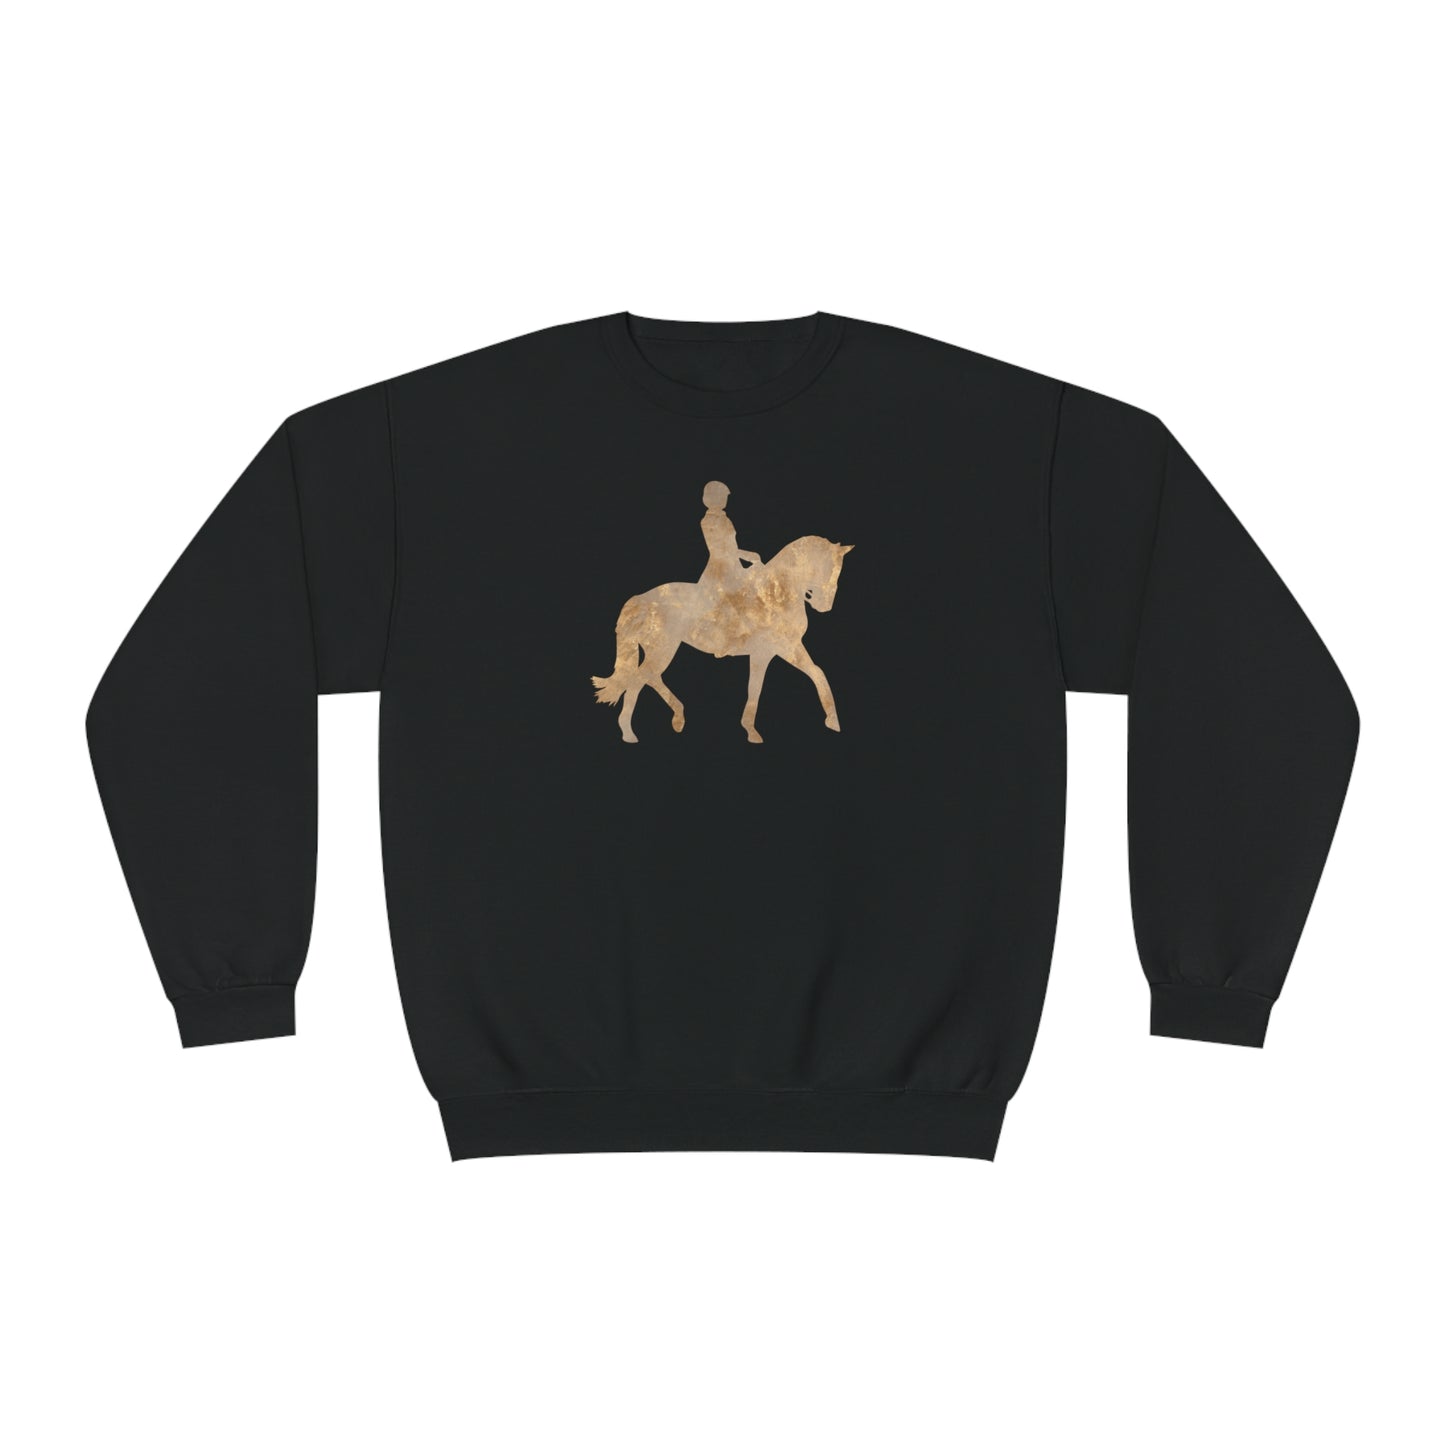 Horse & Rider - Crewneck Sweatshirt